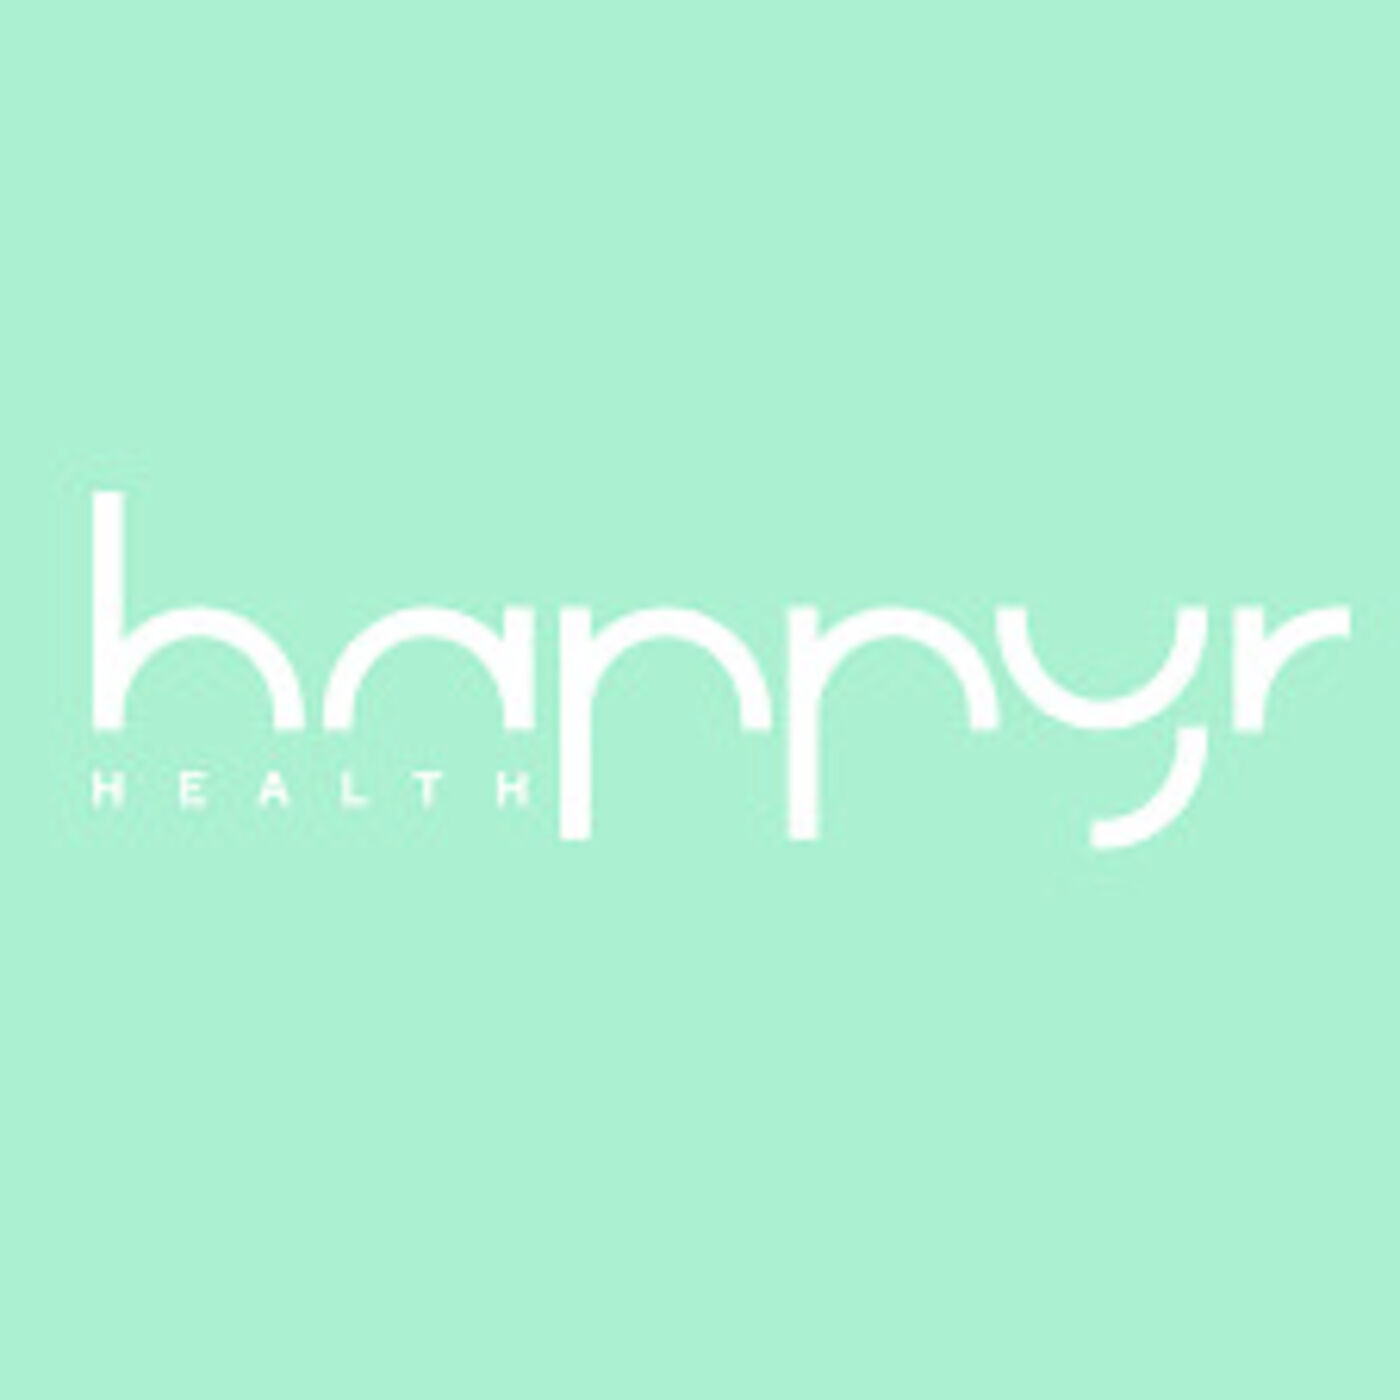 Startup Profile: Happyr Health (009)